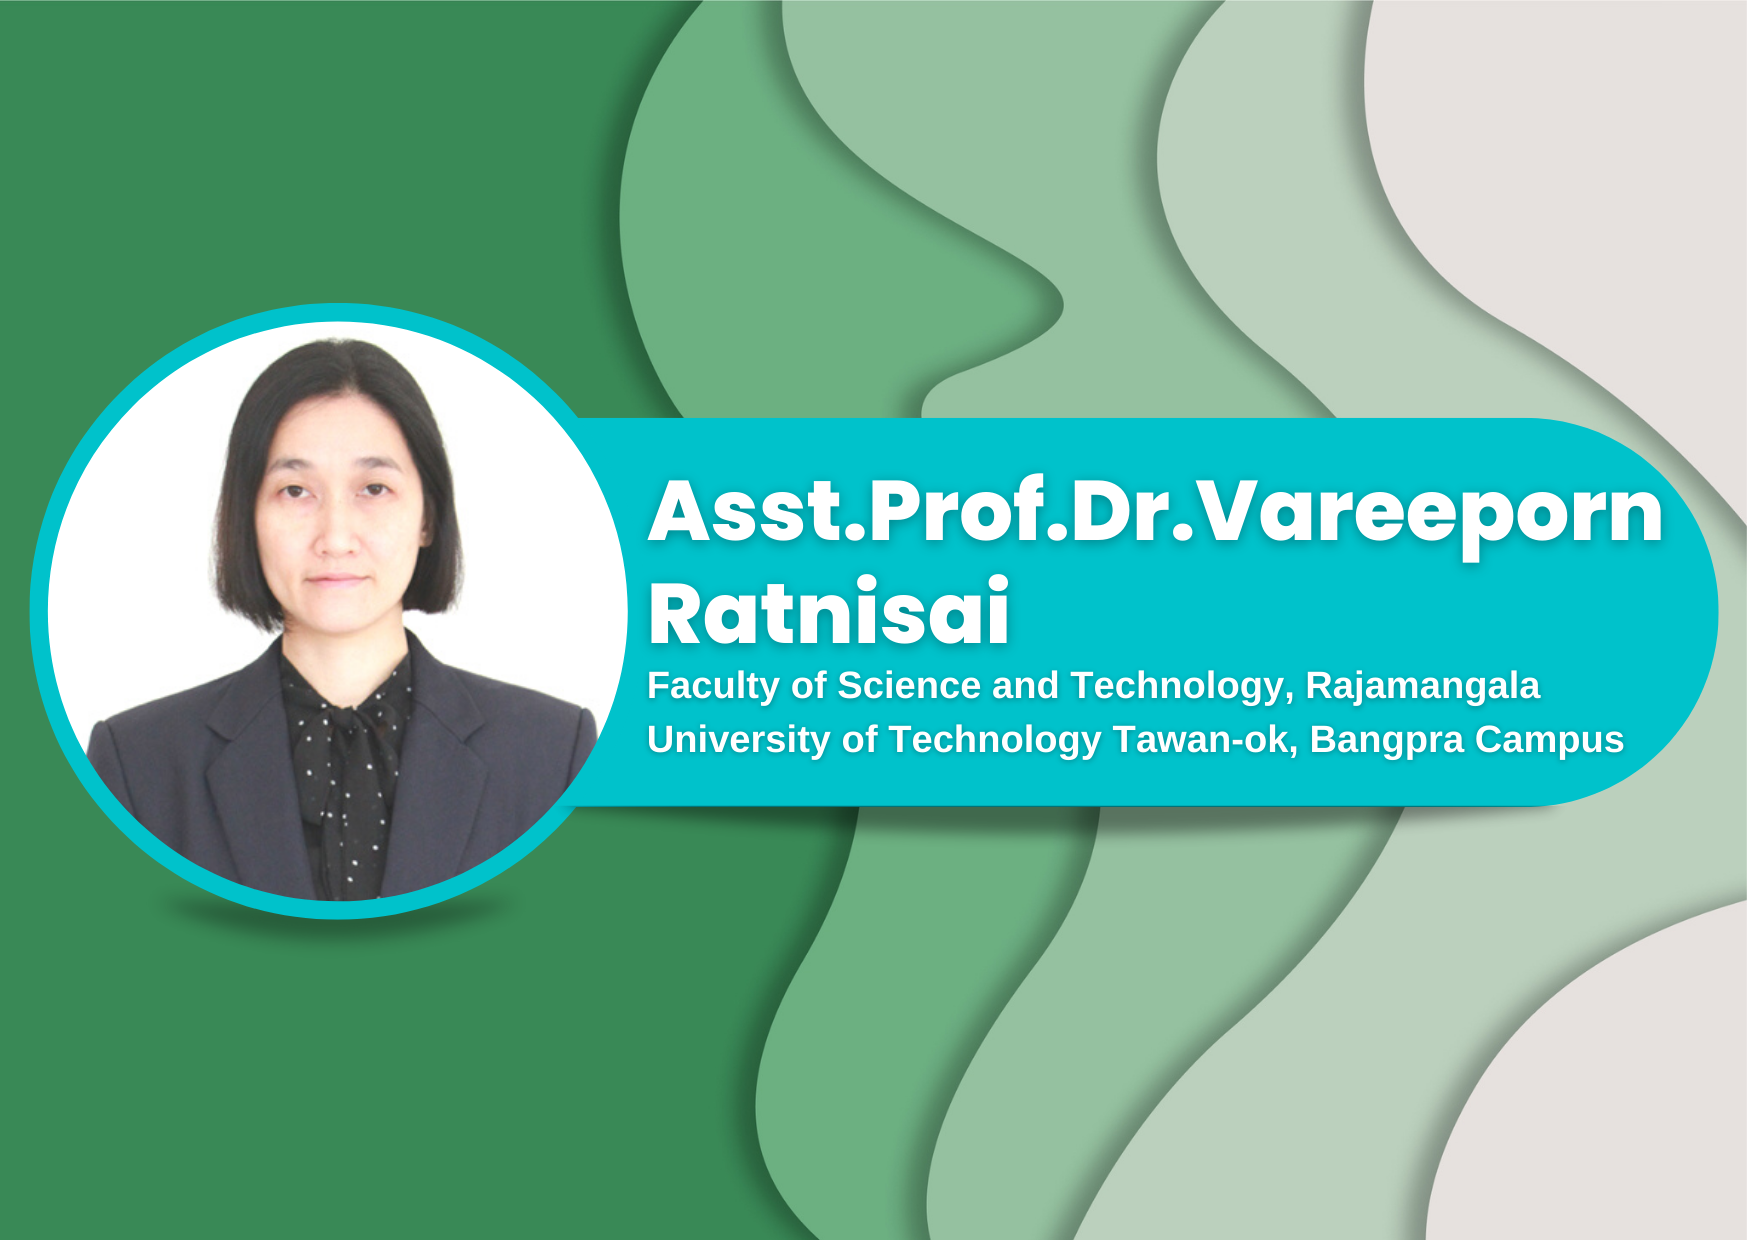 Asst.Prof.Dr. Vareeporn Ratnisai